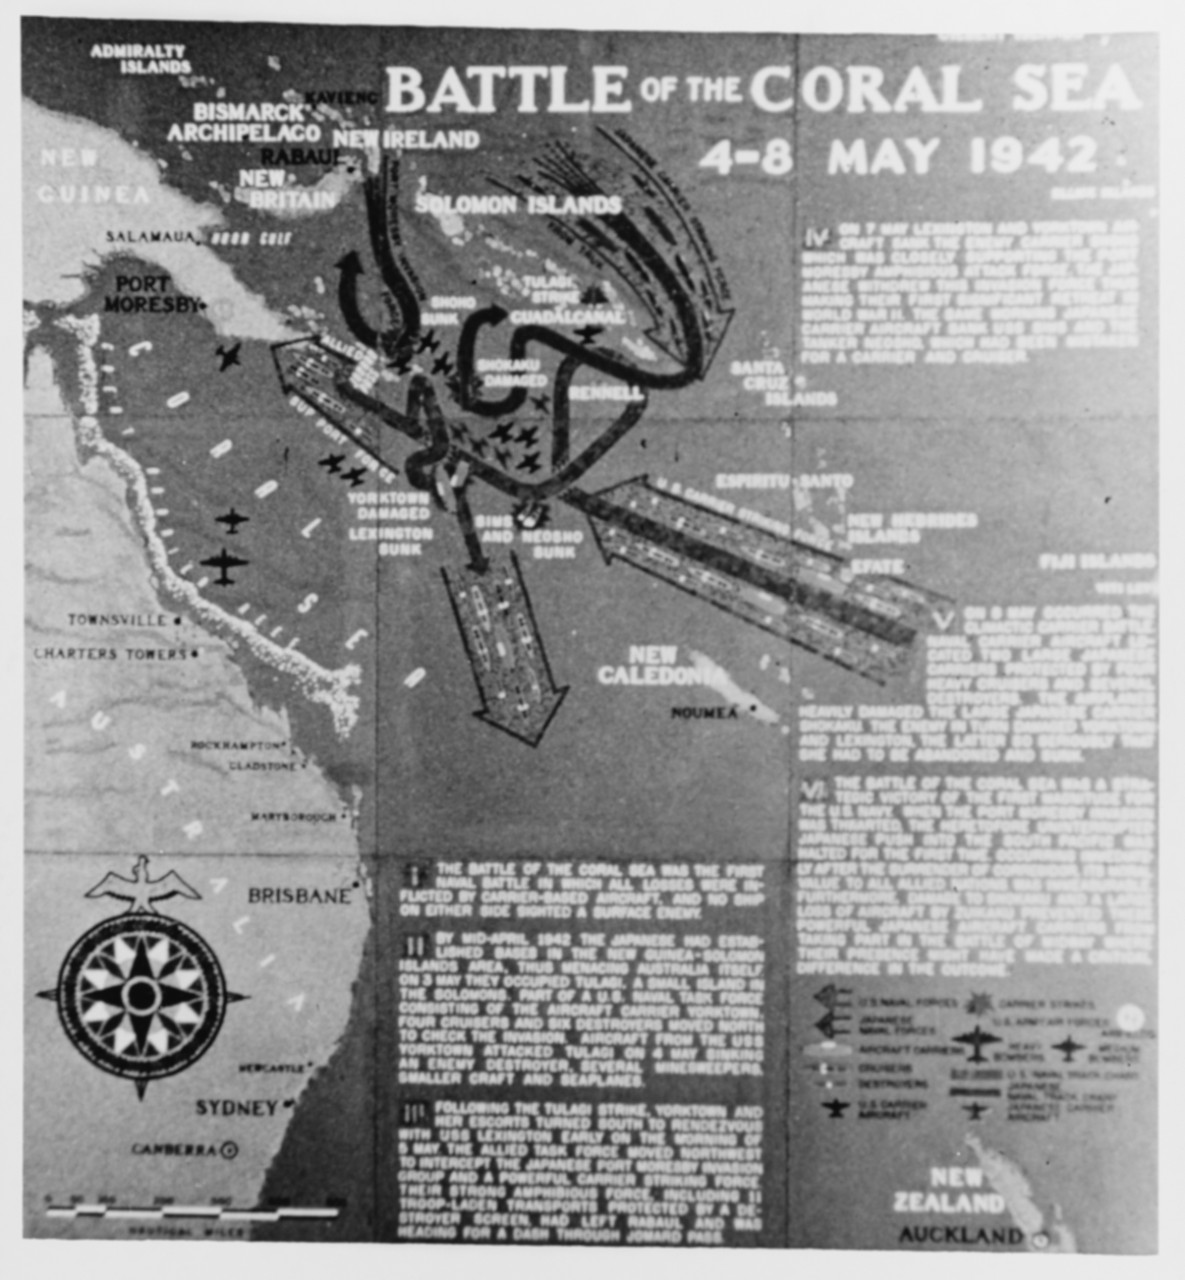 Coral Sea World War II Battle Chart, Battle of the Coral Sea, 4-8 May 1942